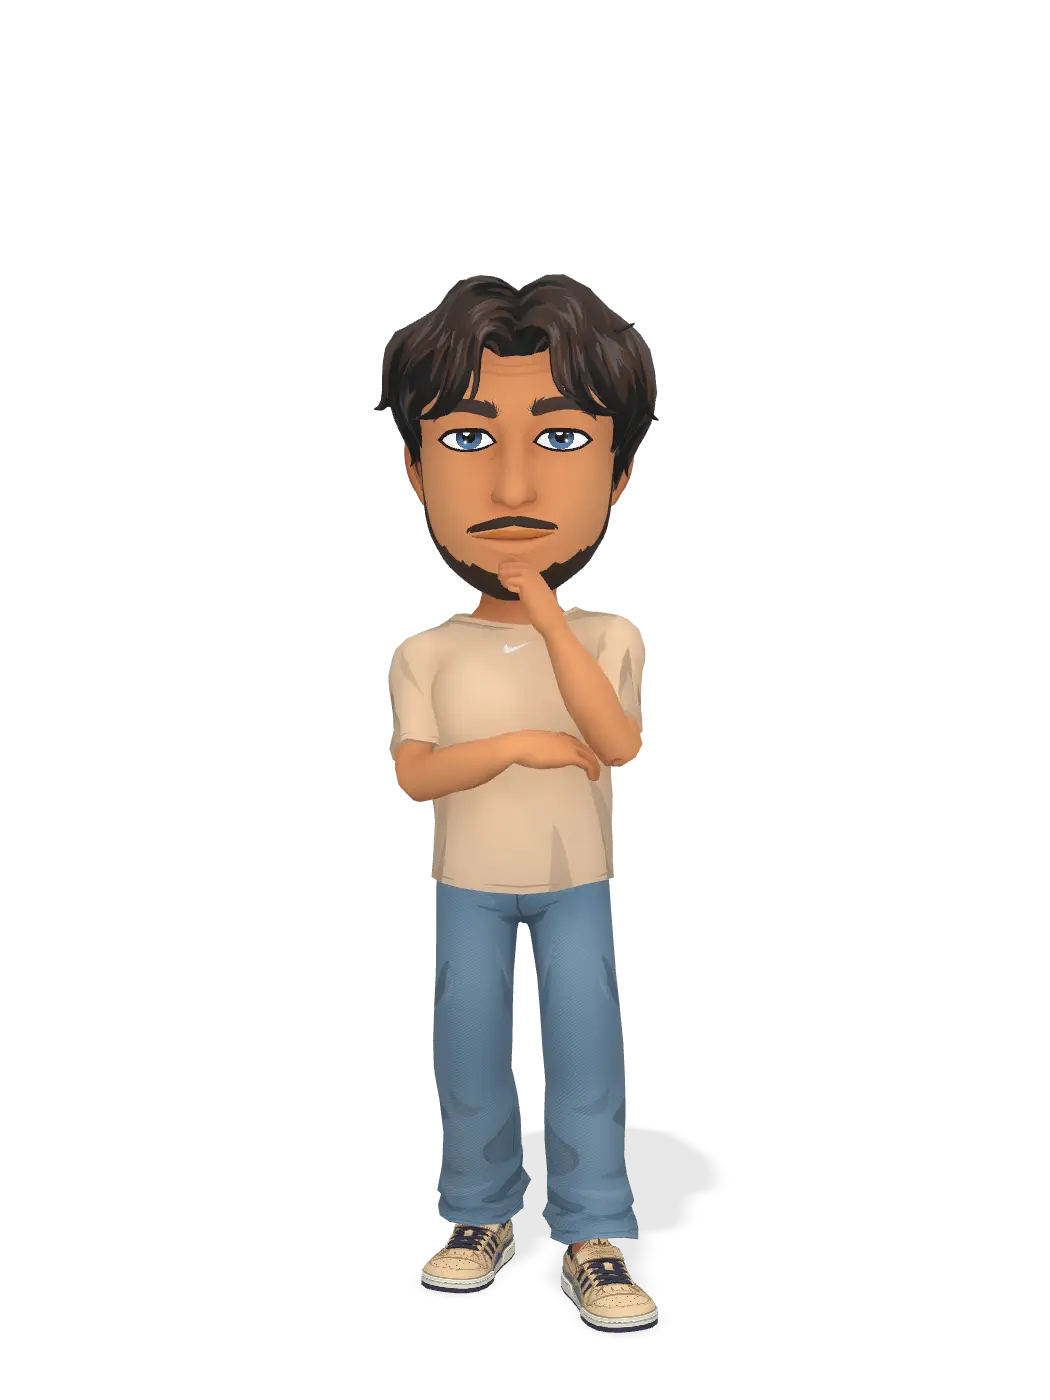 3D Bitmoji for christian020408 avatar